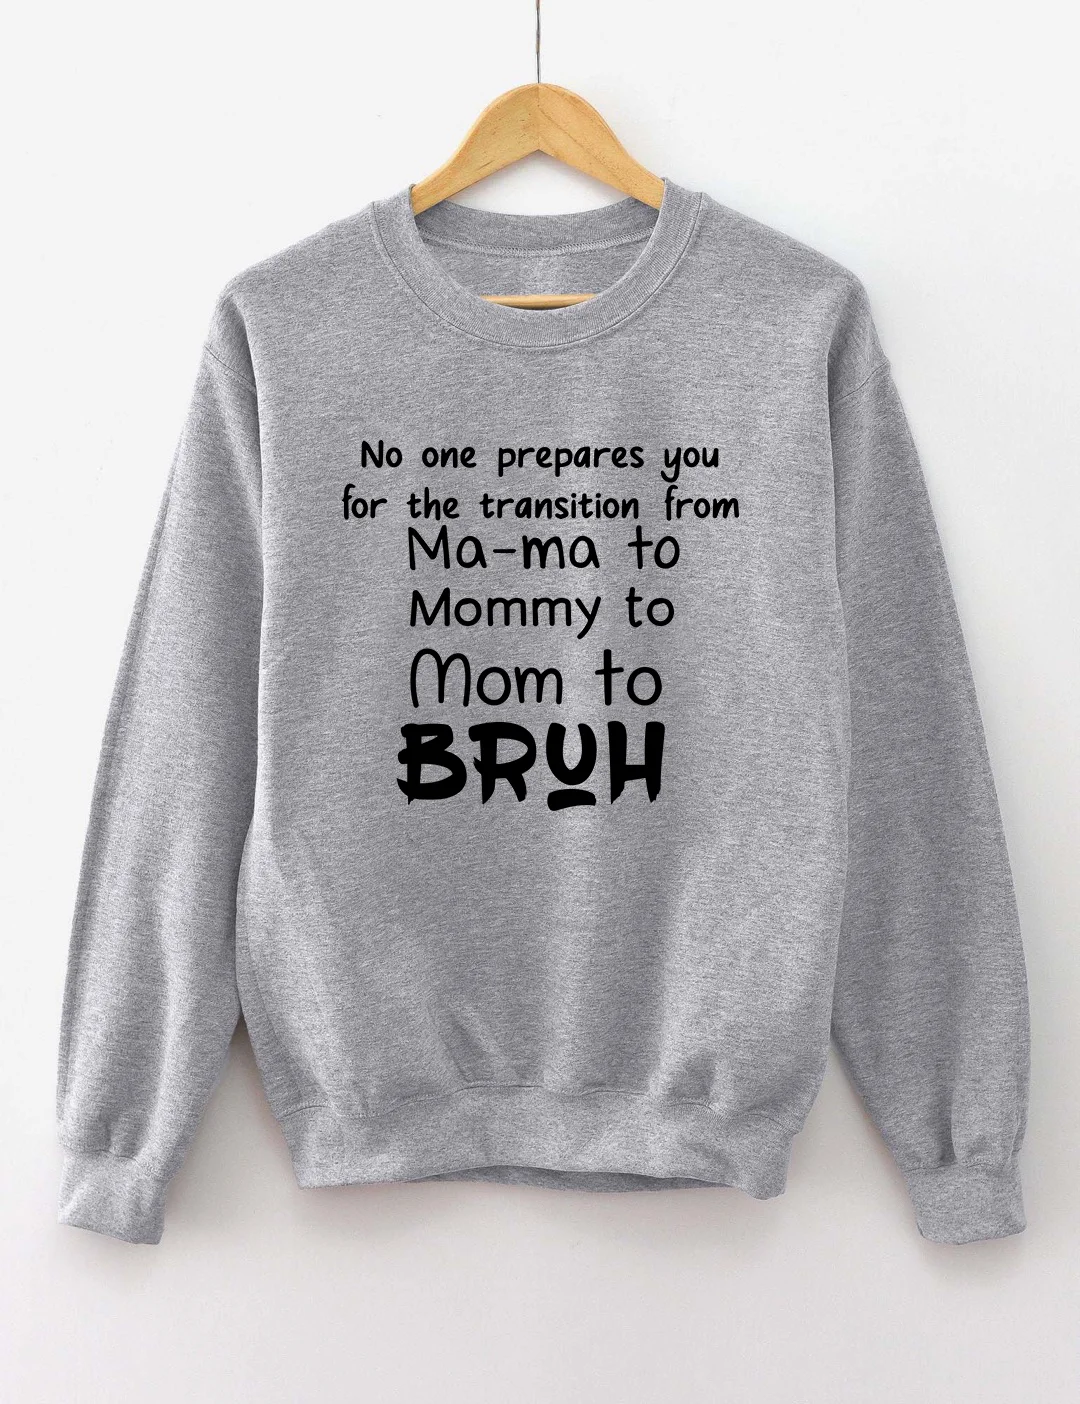 Ma-ma To Mommy To Mom To Bruh Sweatshirt